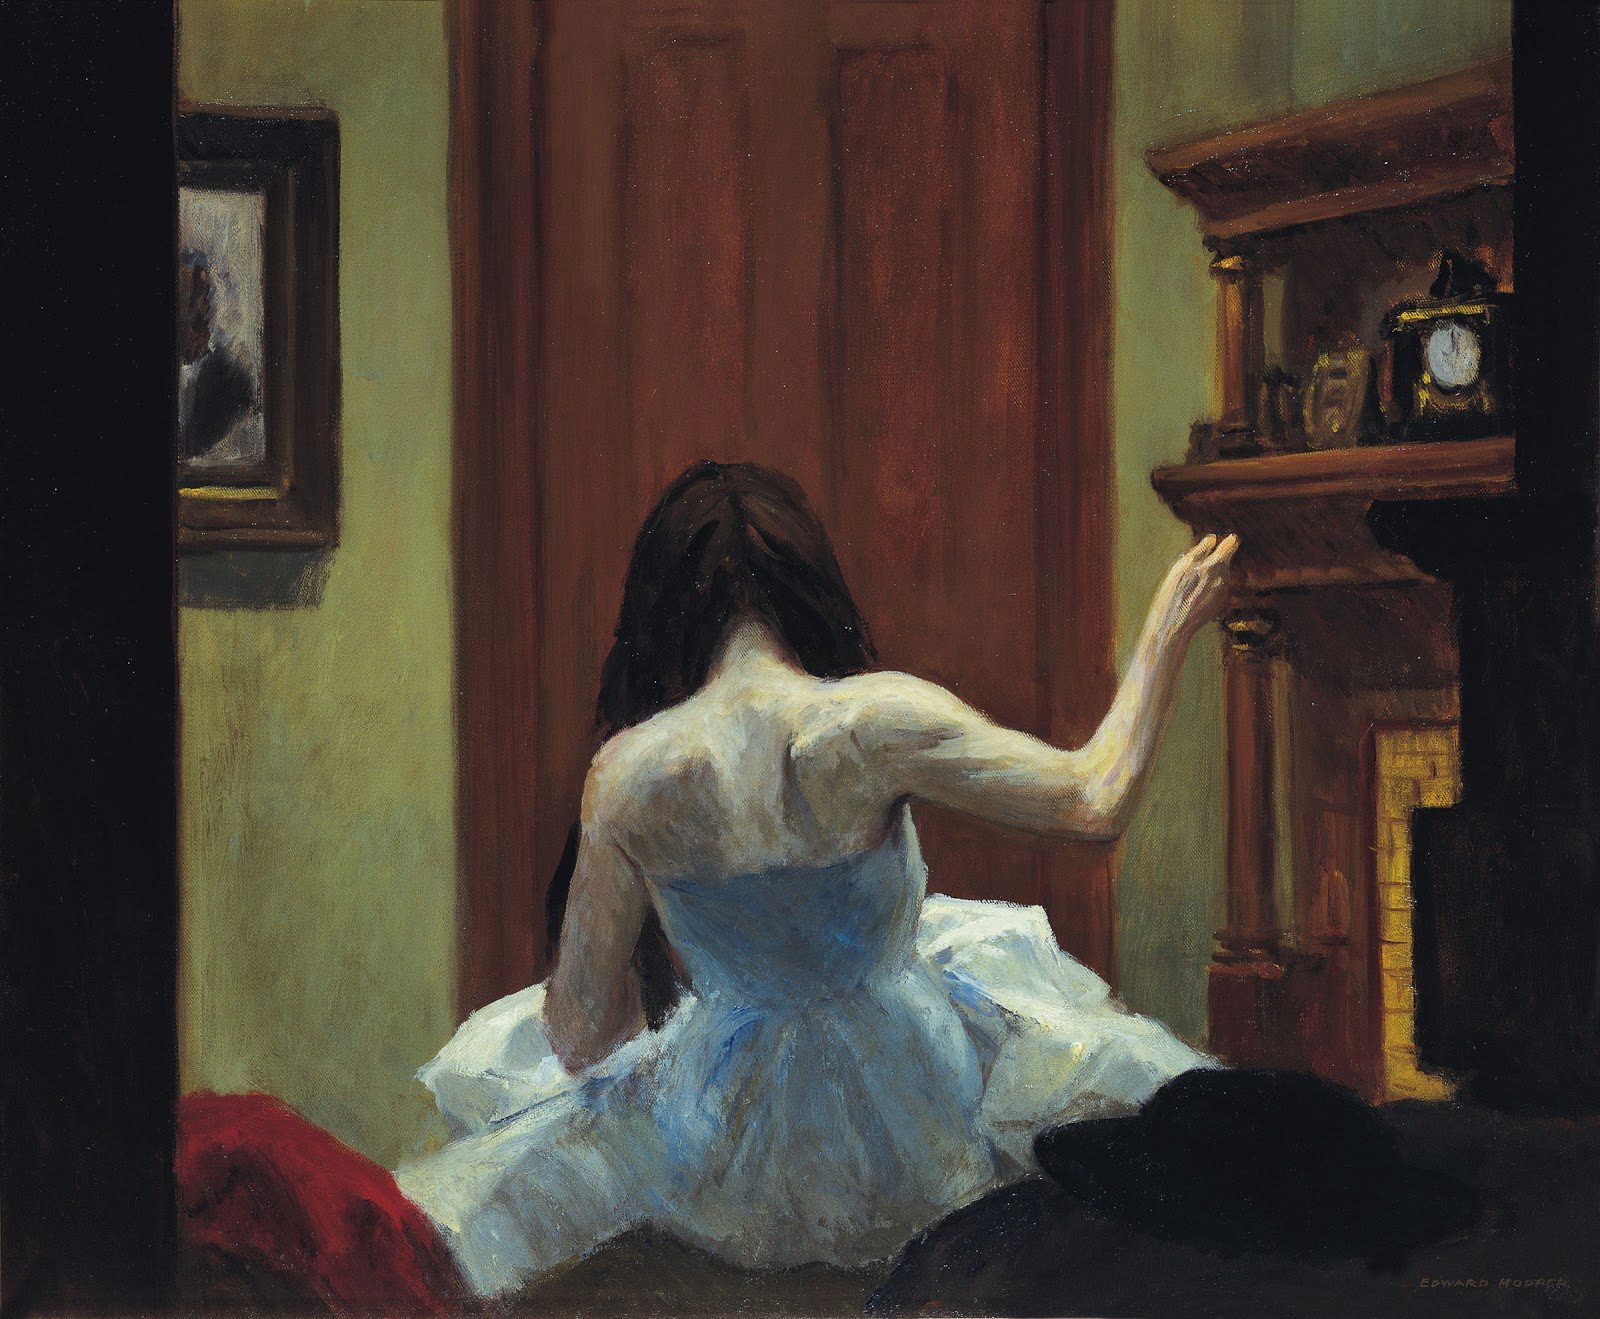 Edward+Hopper-1882-1967 (156).jpg